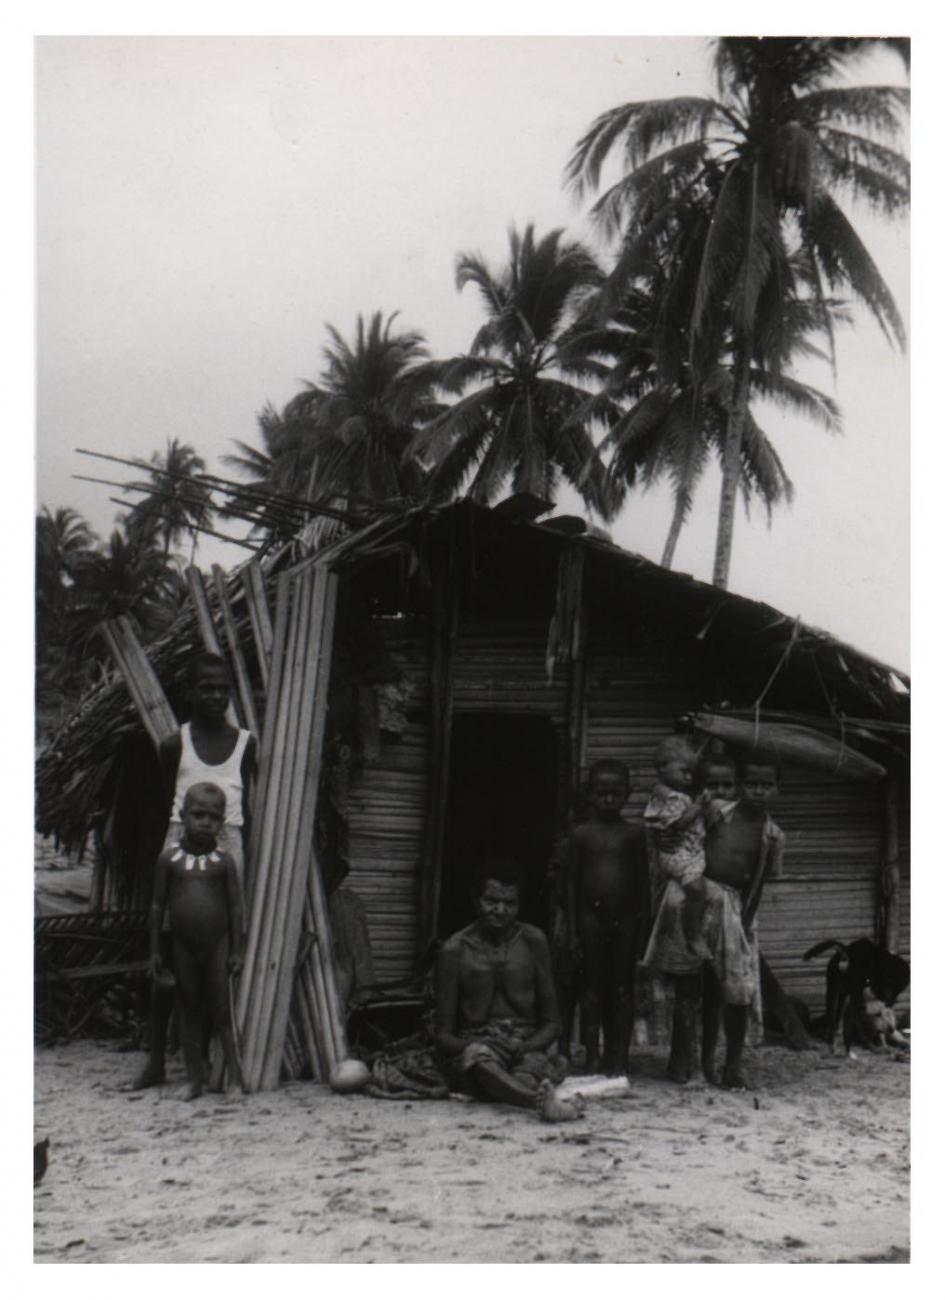 BD/54/30 - 
Papuan group photo, Kampong Kompol I Merauke
